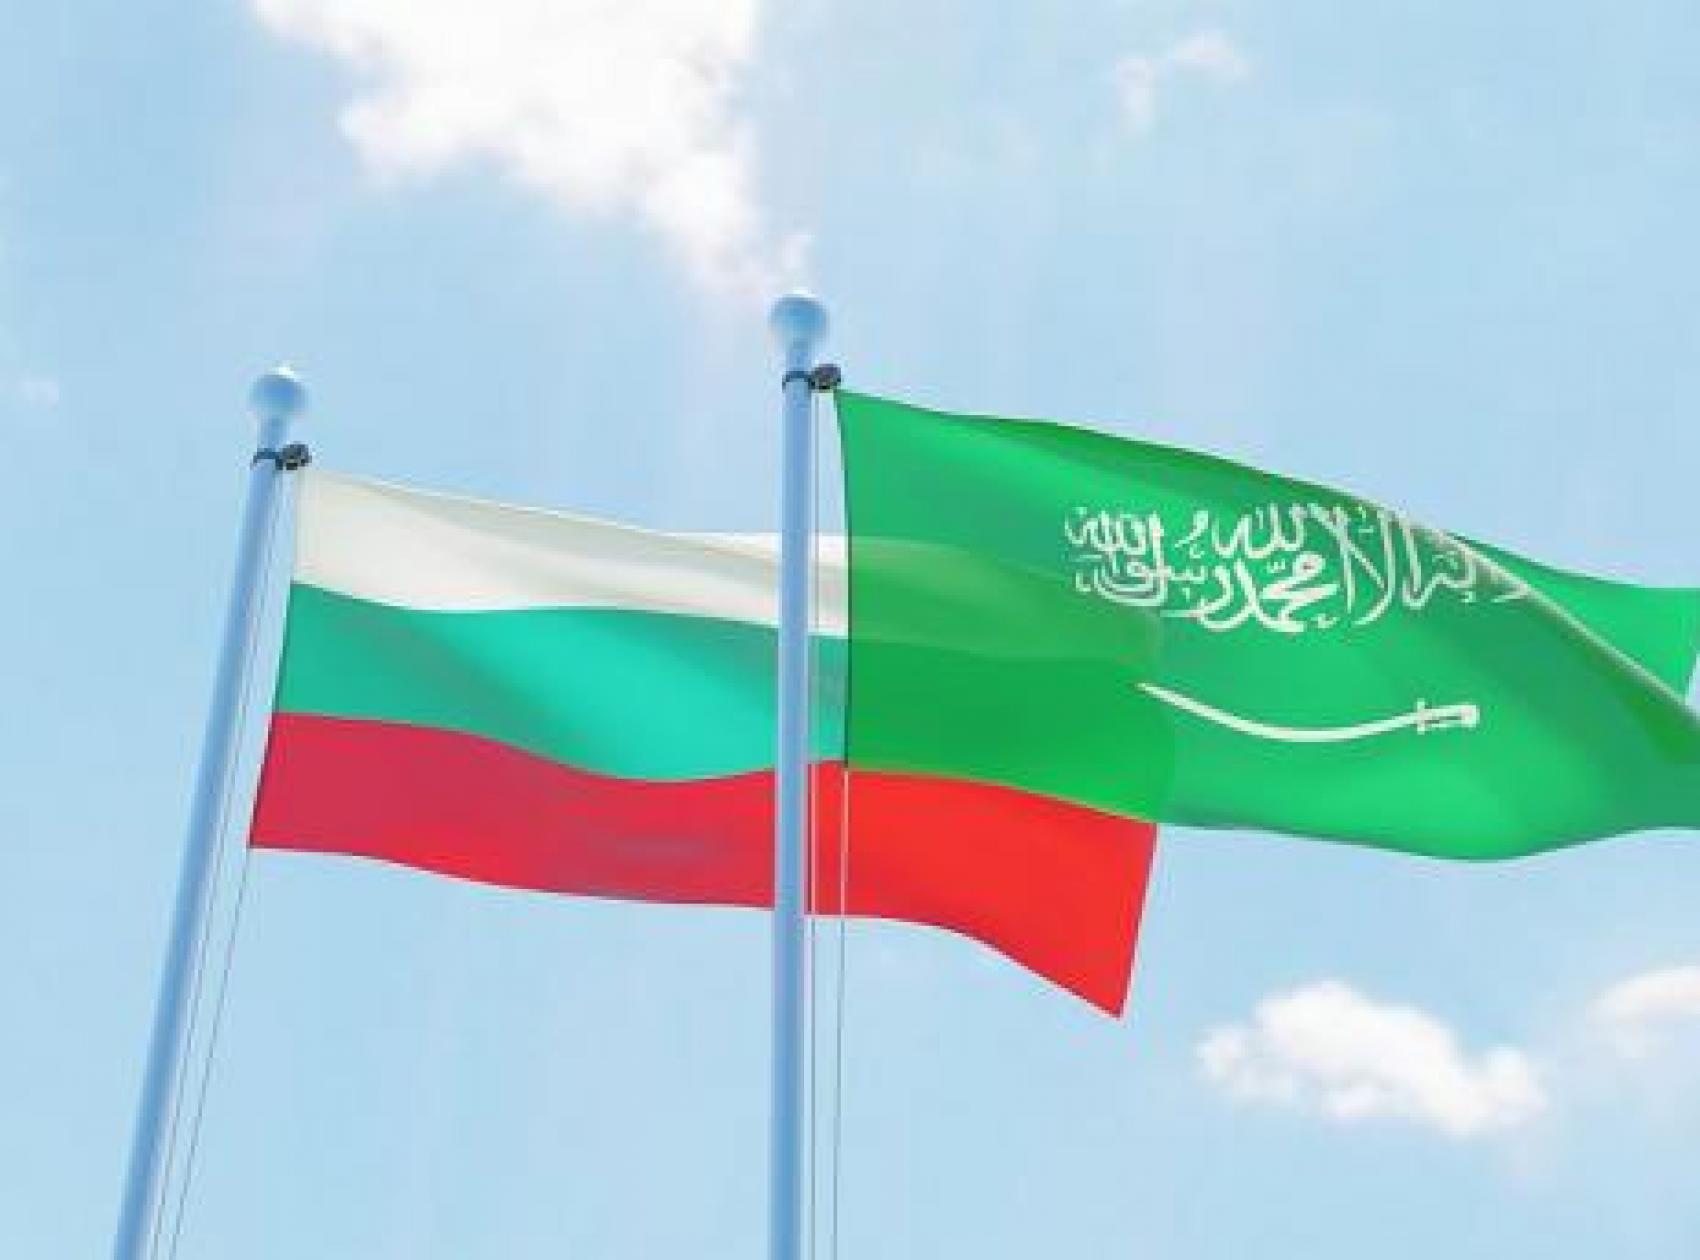 The Republic of Bulgaria and the Kingdom of Saudi Arabia